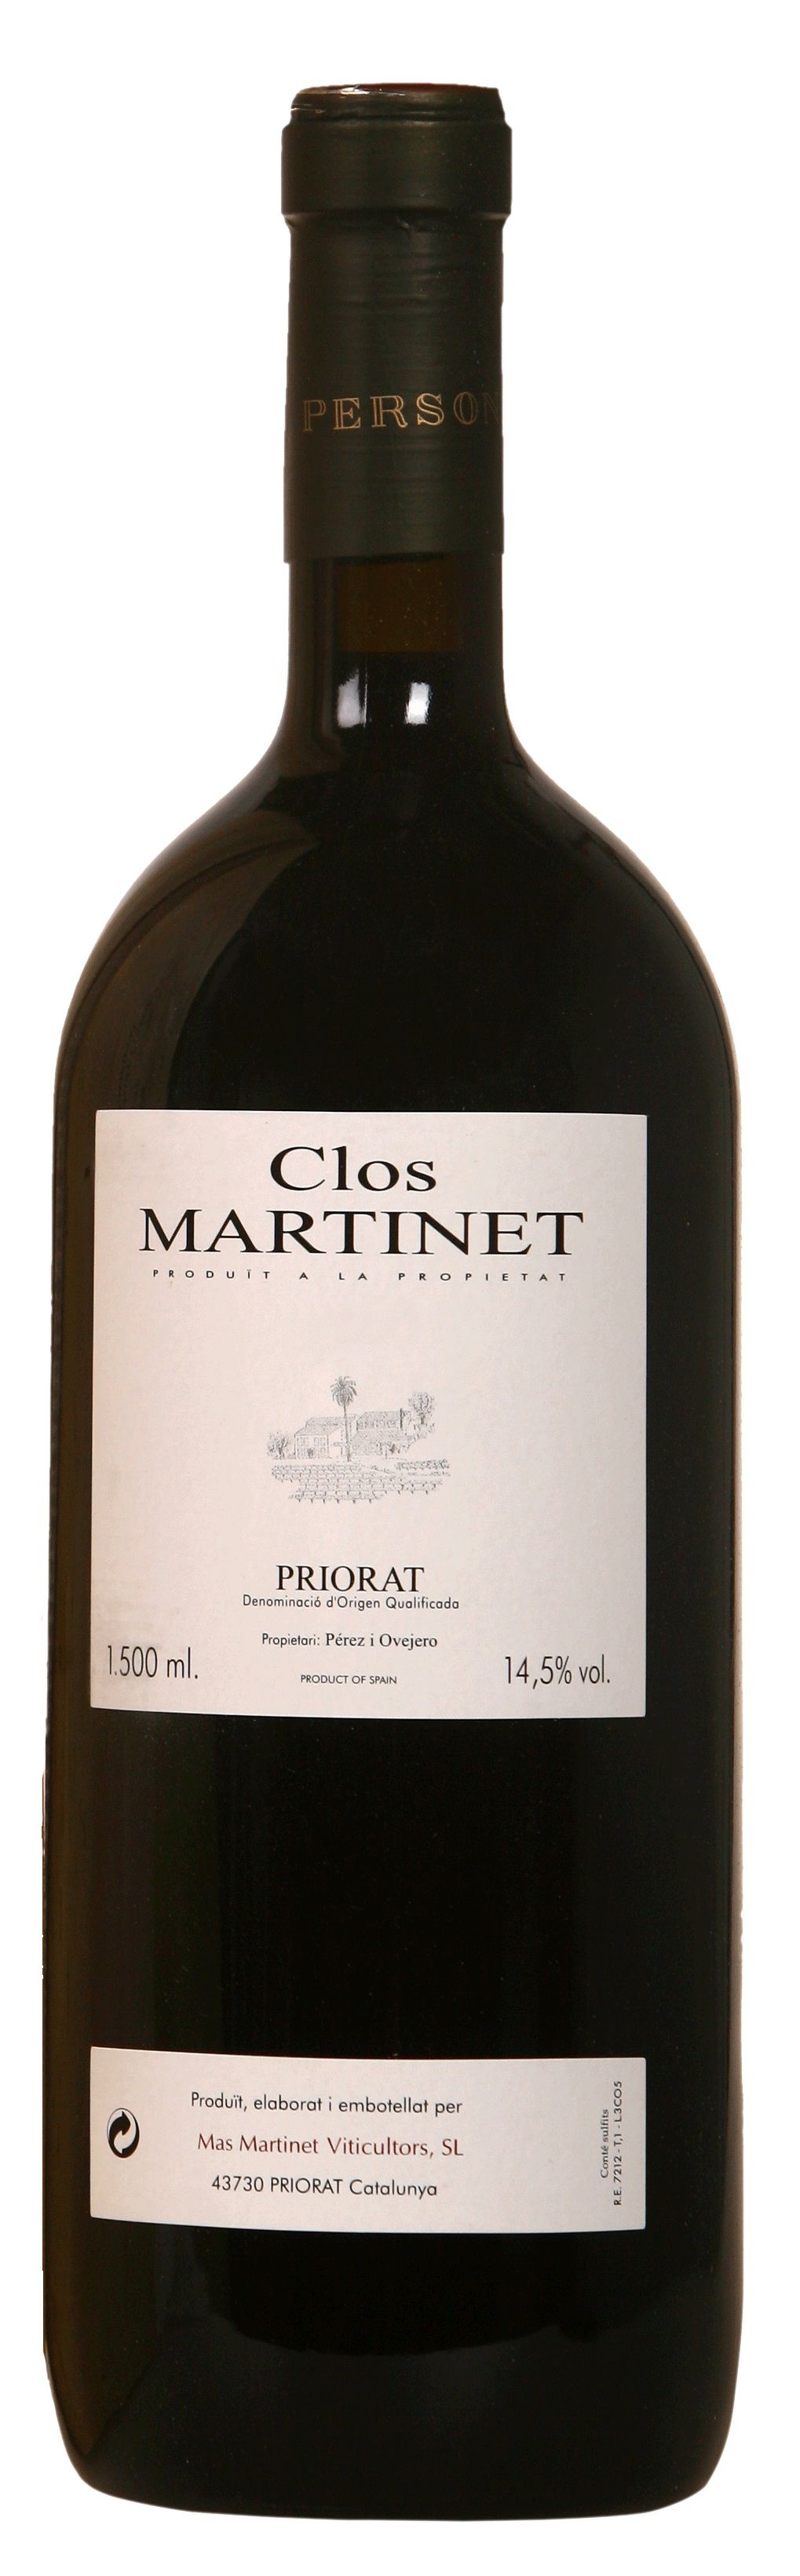 Mas Martinet, Clos Martinet, 2009